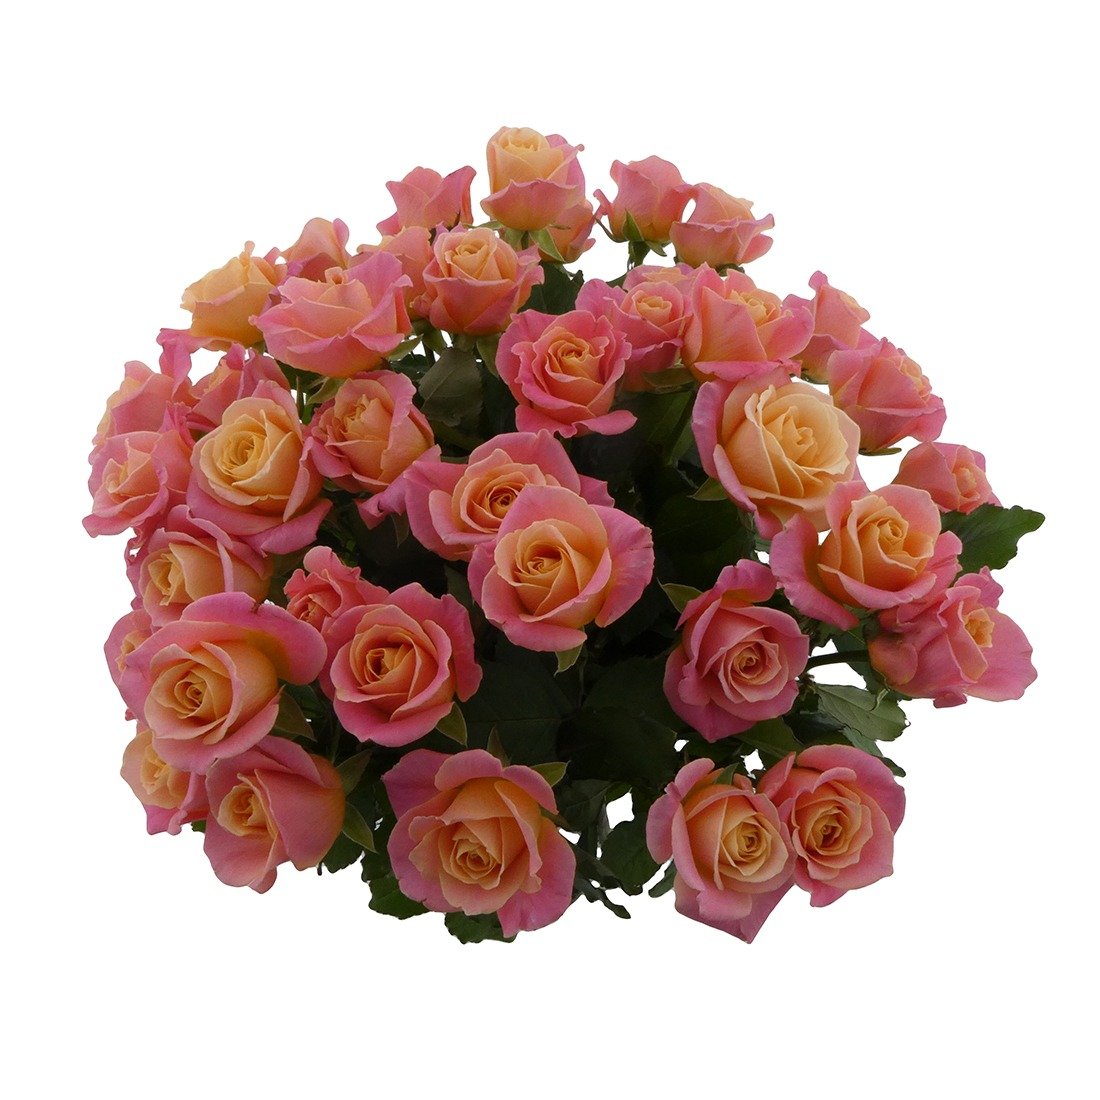 fotostudio flower rose productfotografie